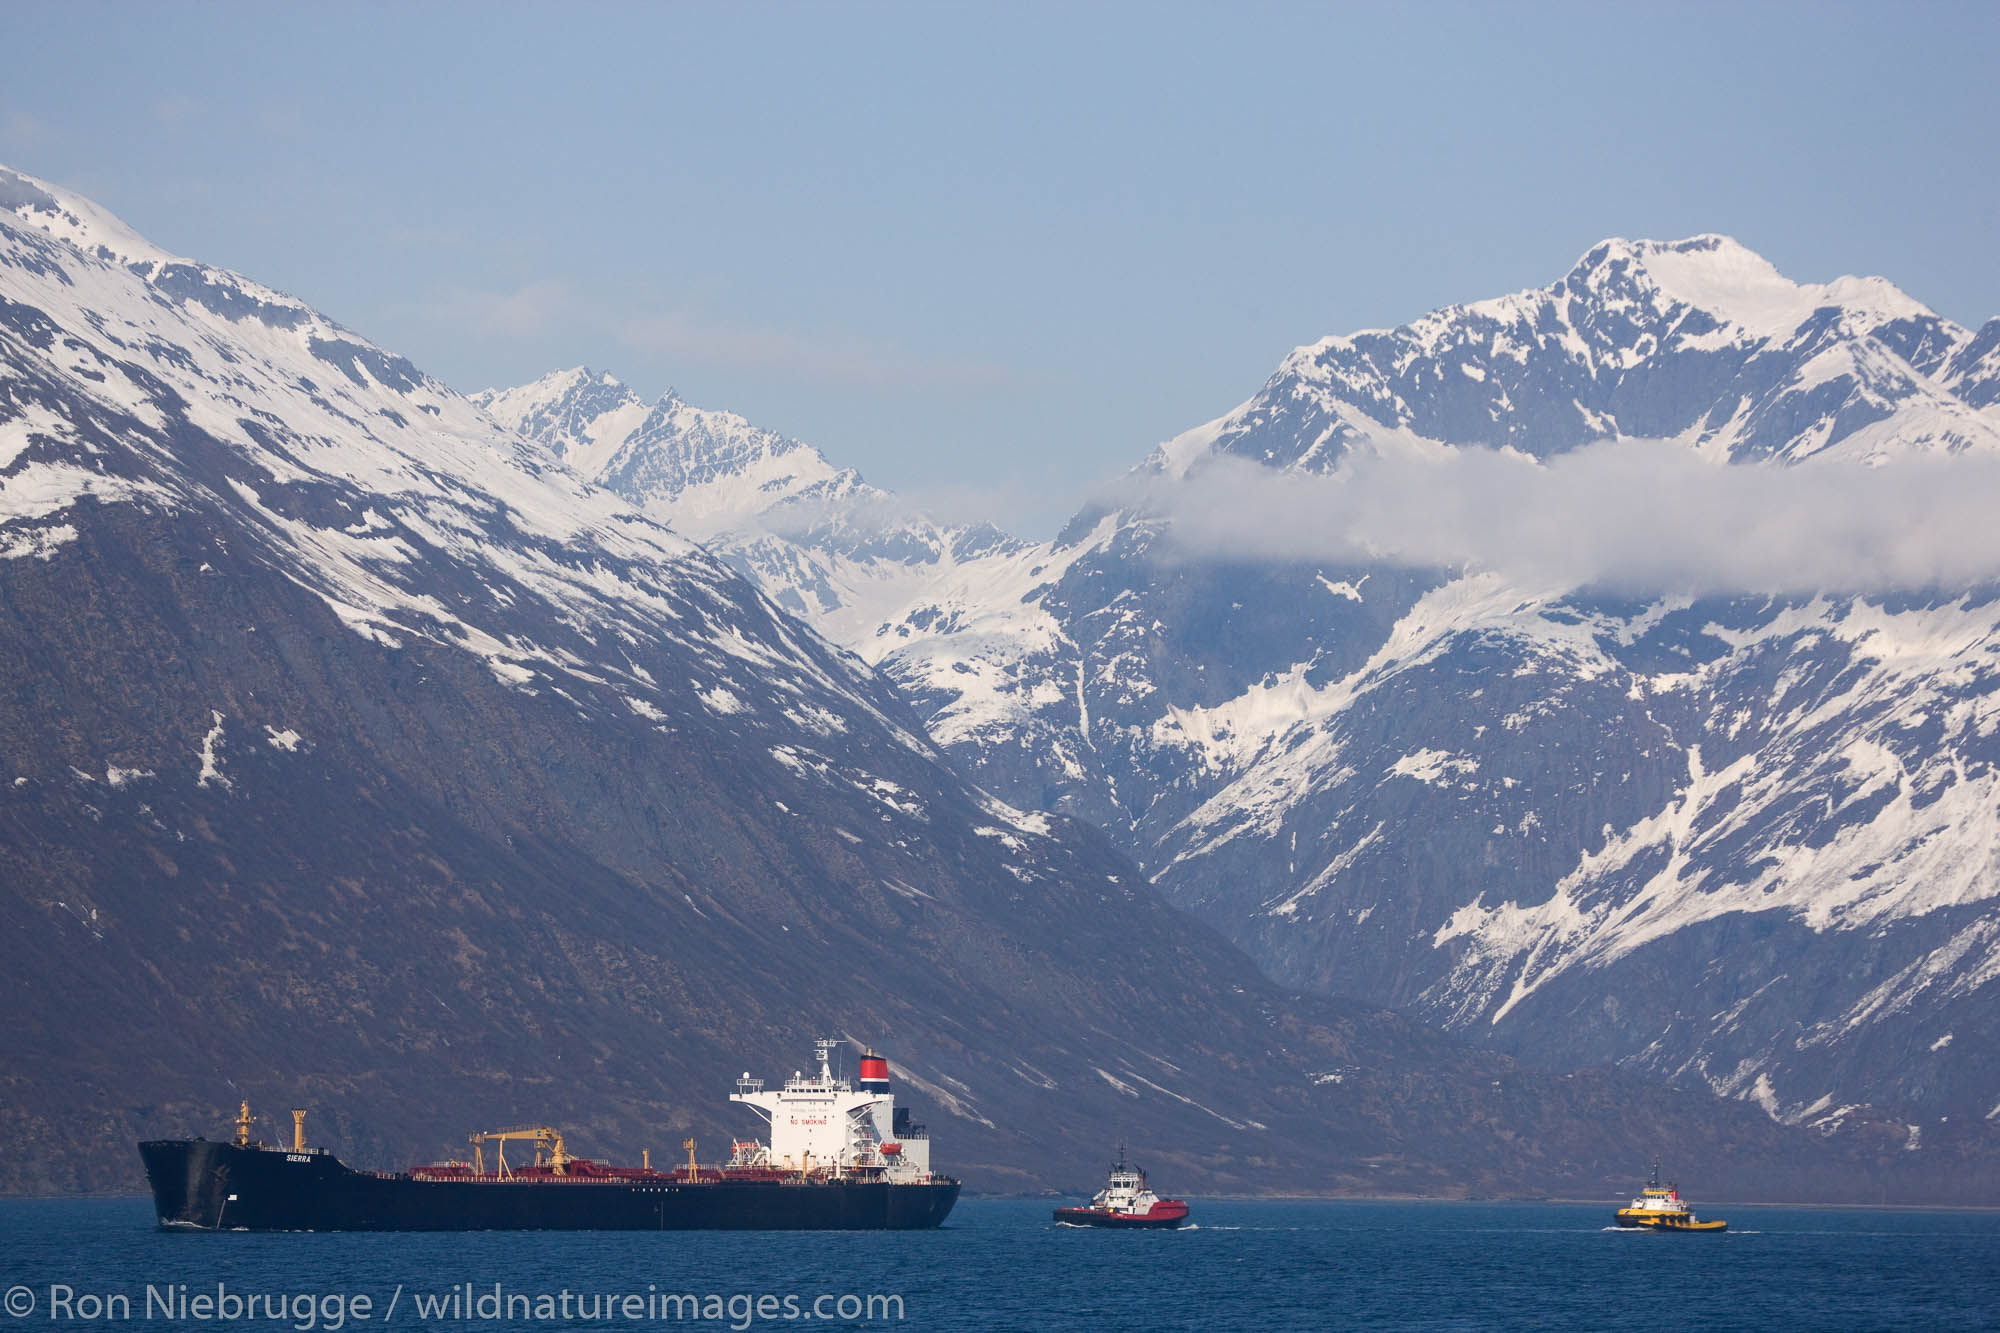 A couple of Crowley tugs escort the oil tanker Sierra, Prince William Sound, Valdez, Alaska